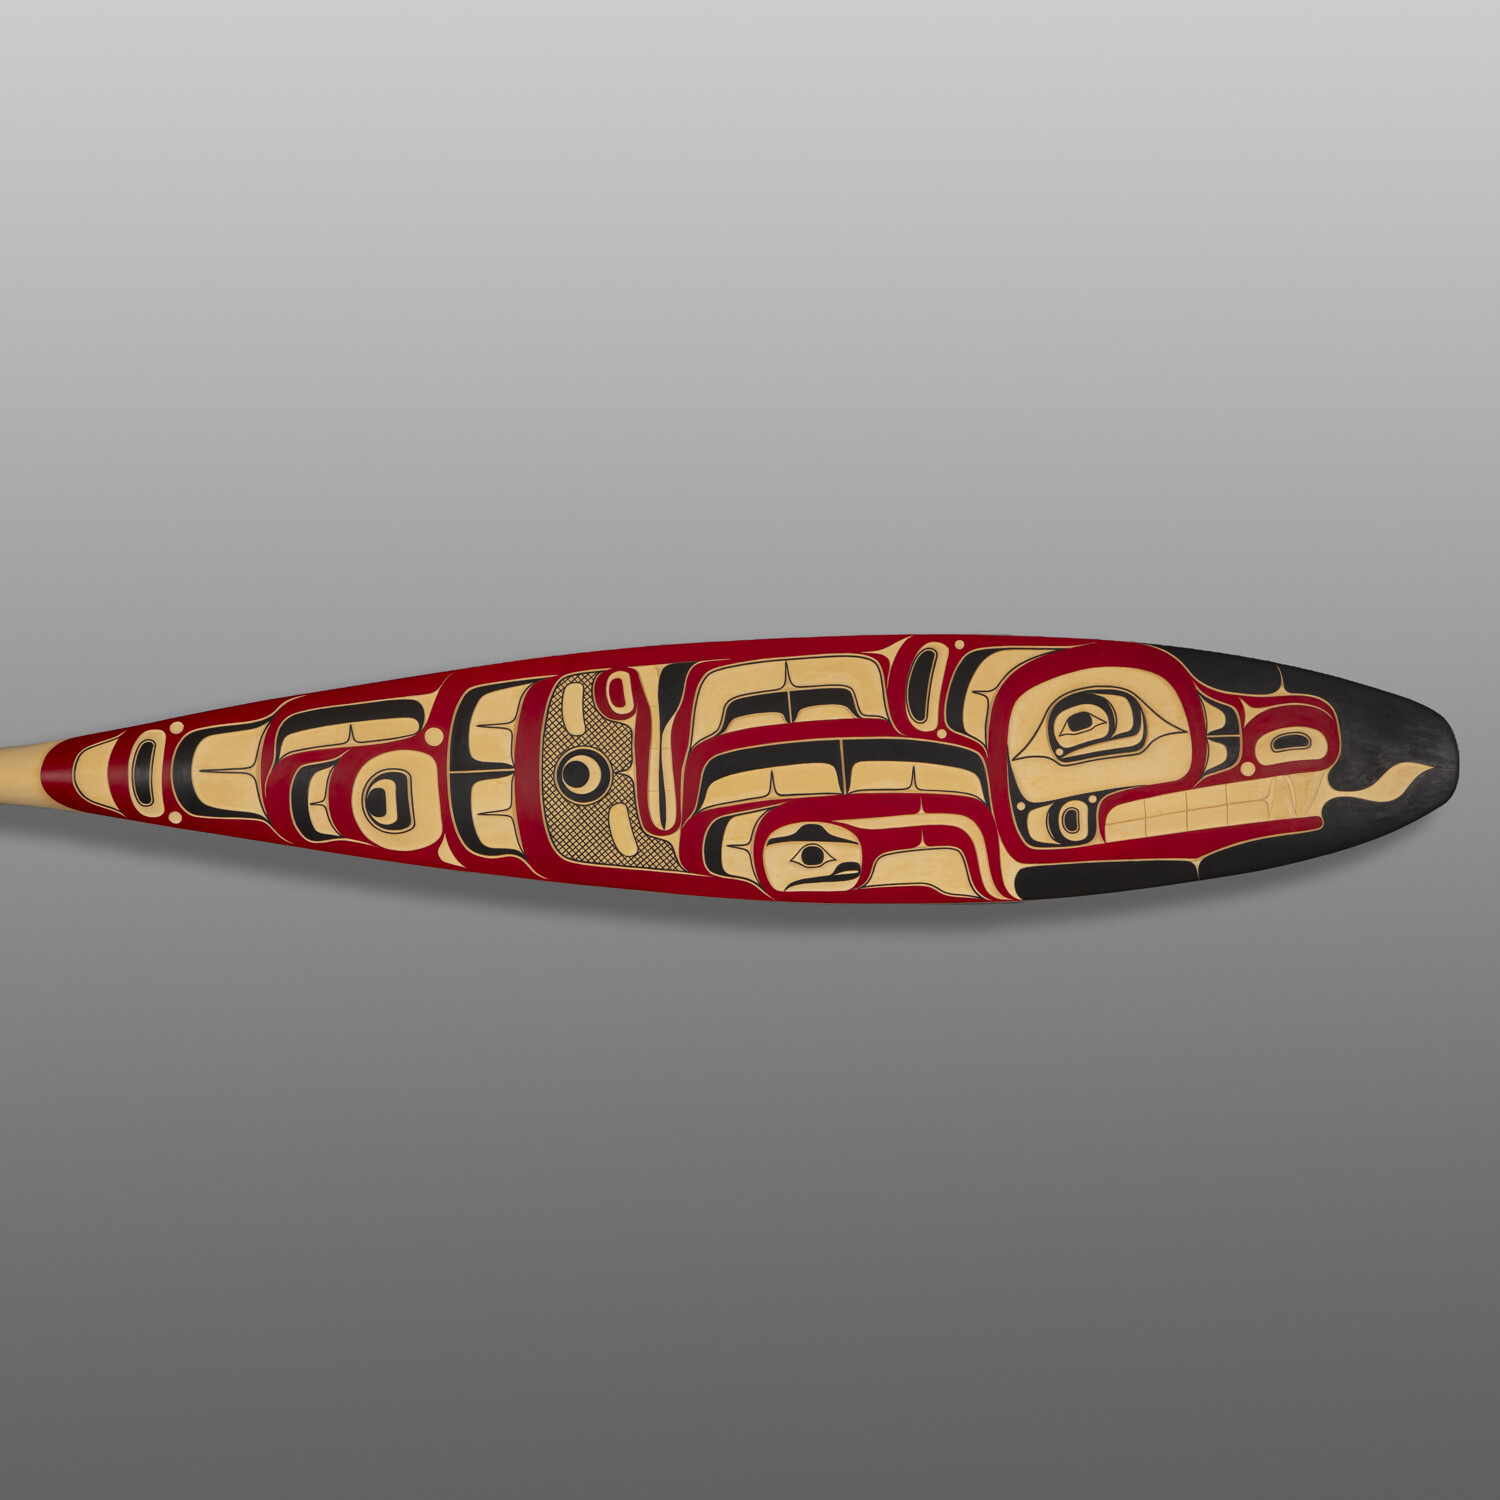 Wolf Paddle (Gyibaaw)
Shawn Aster
Tsimshian
Yellow cedar, paint
$6500Paddle Show 2024